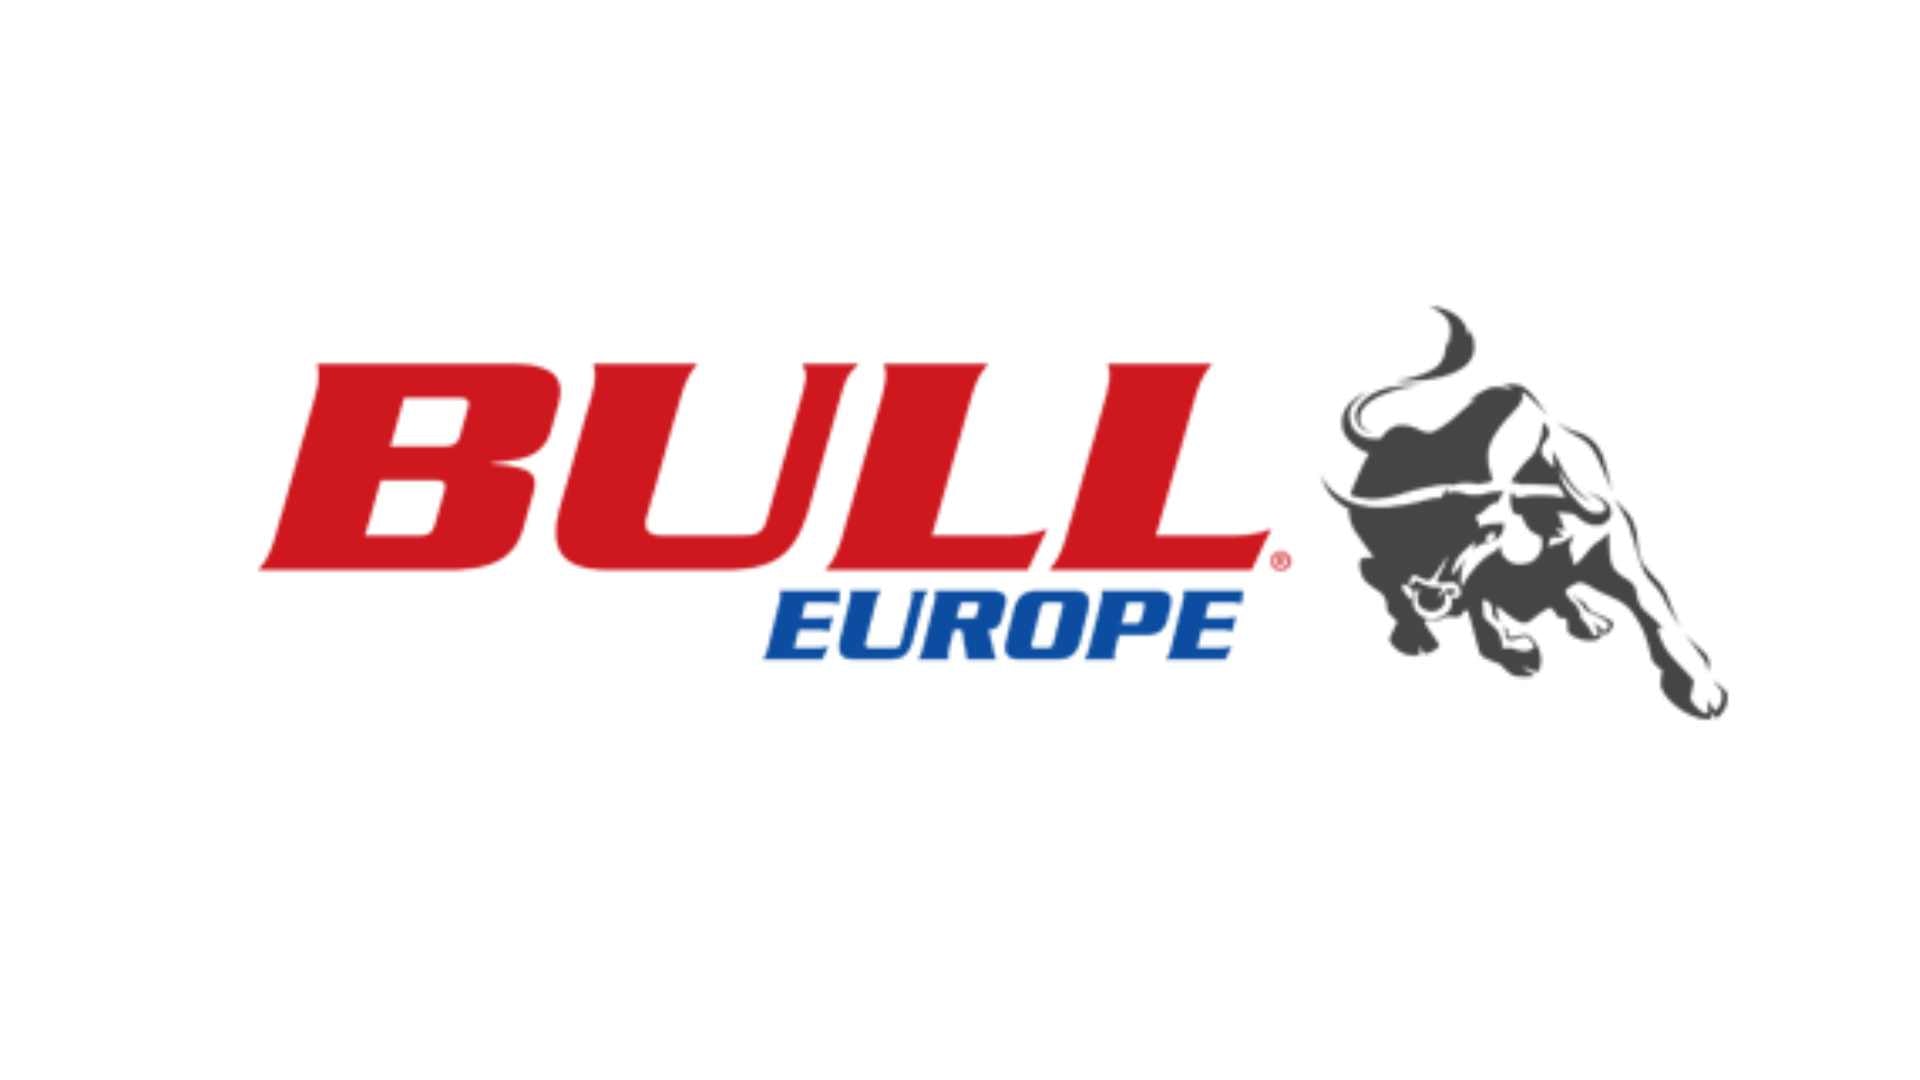 Bull BBQ logo